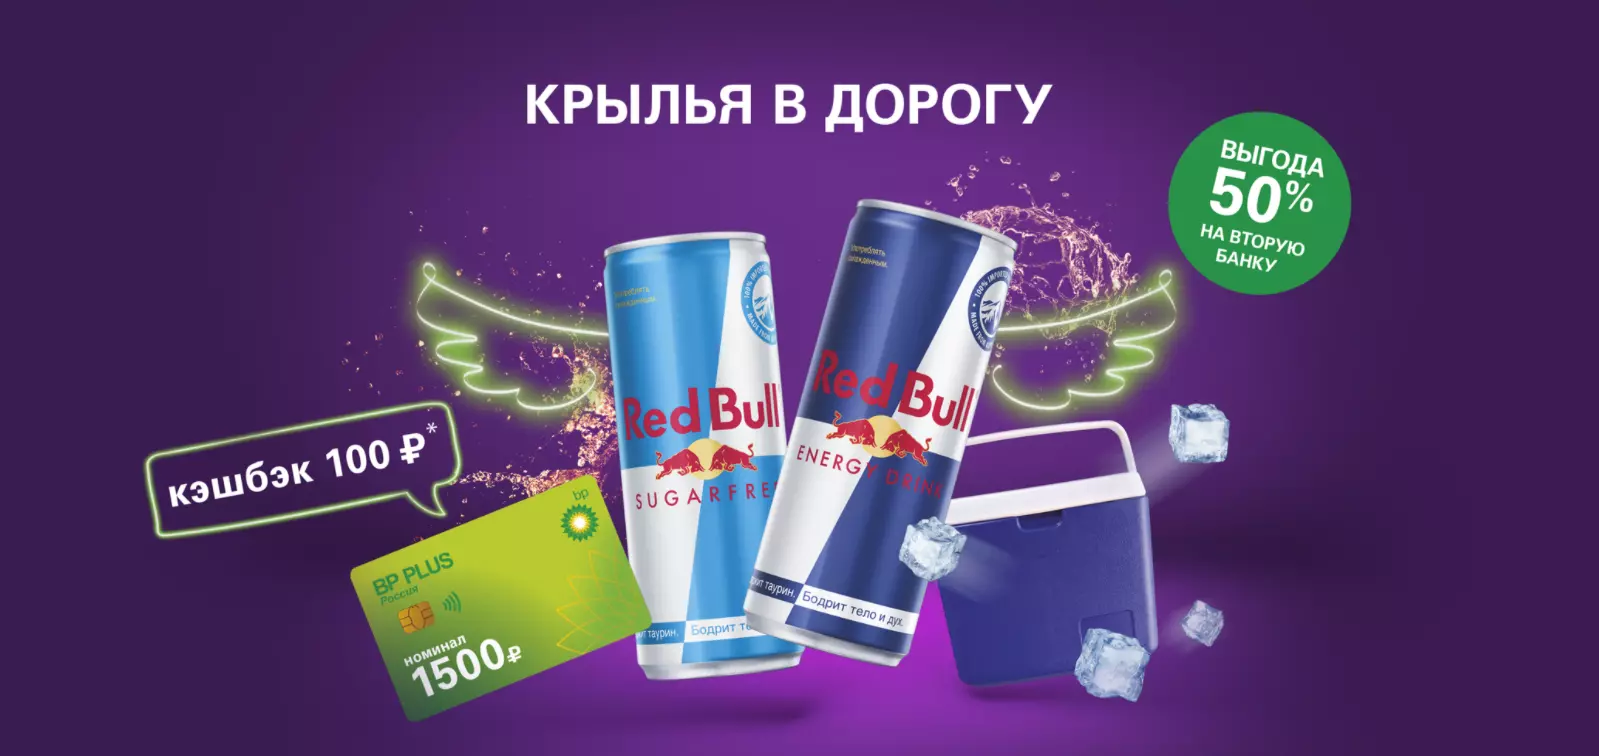 Акция Red Bull и BP: «Выигрывай призы на BP»